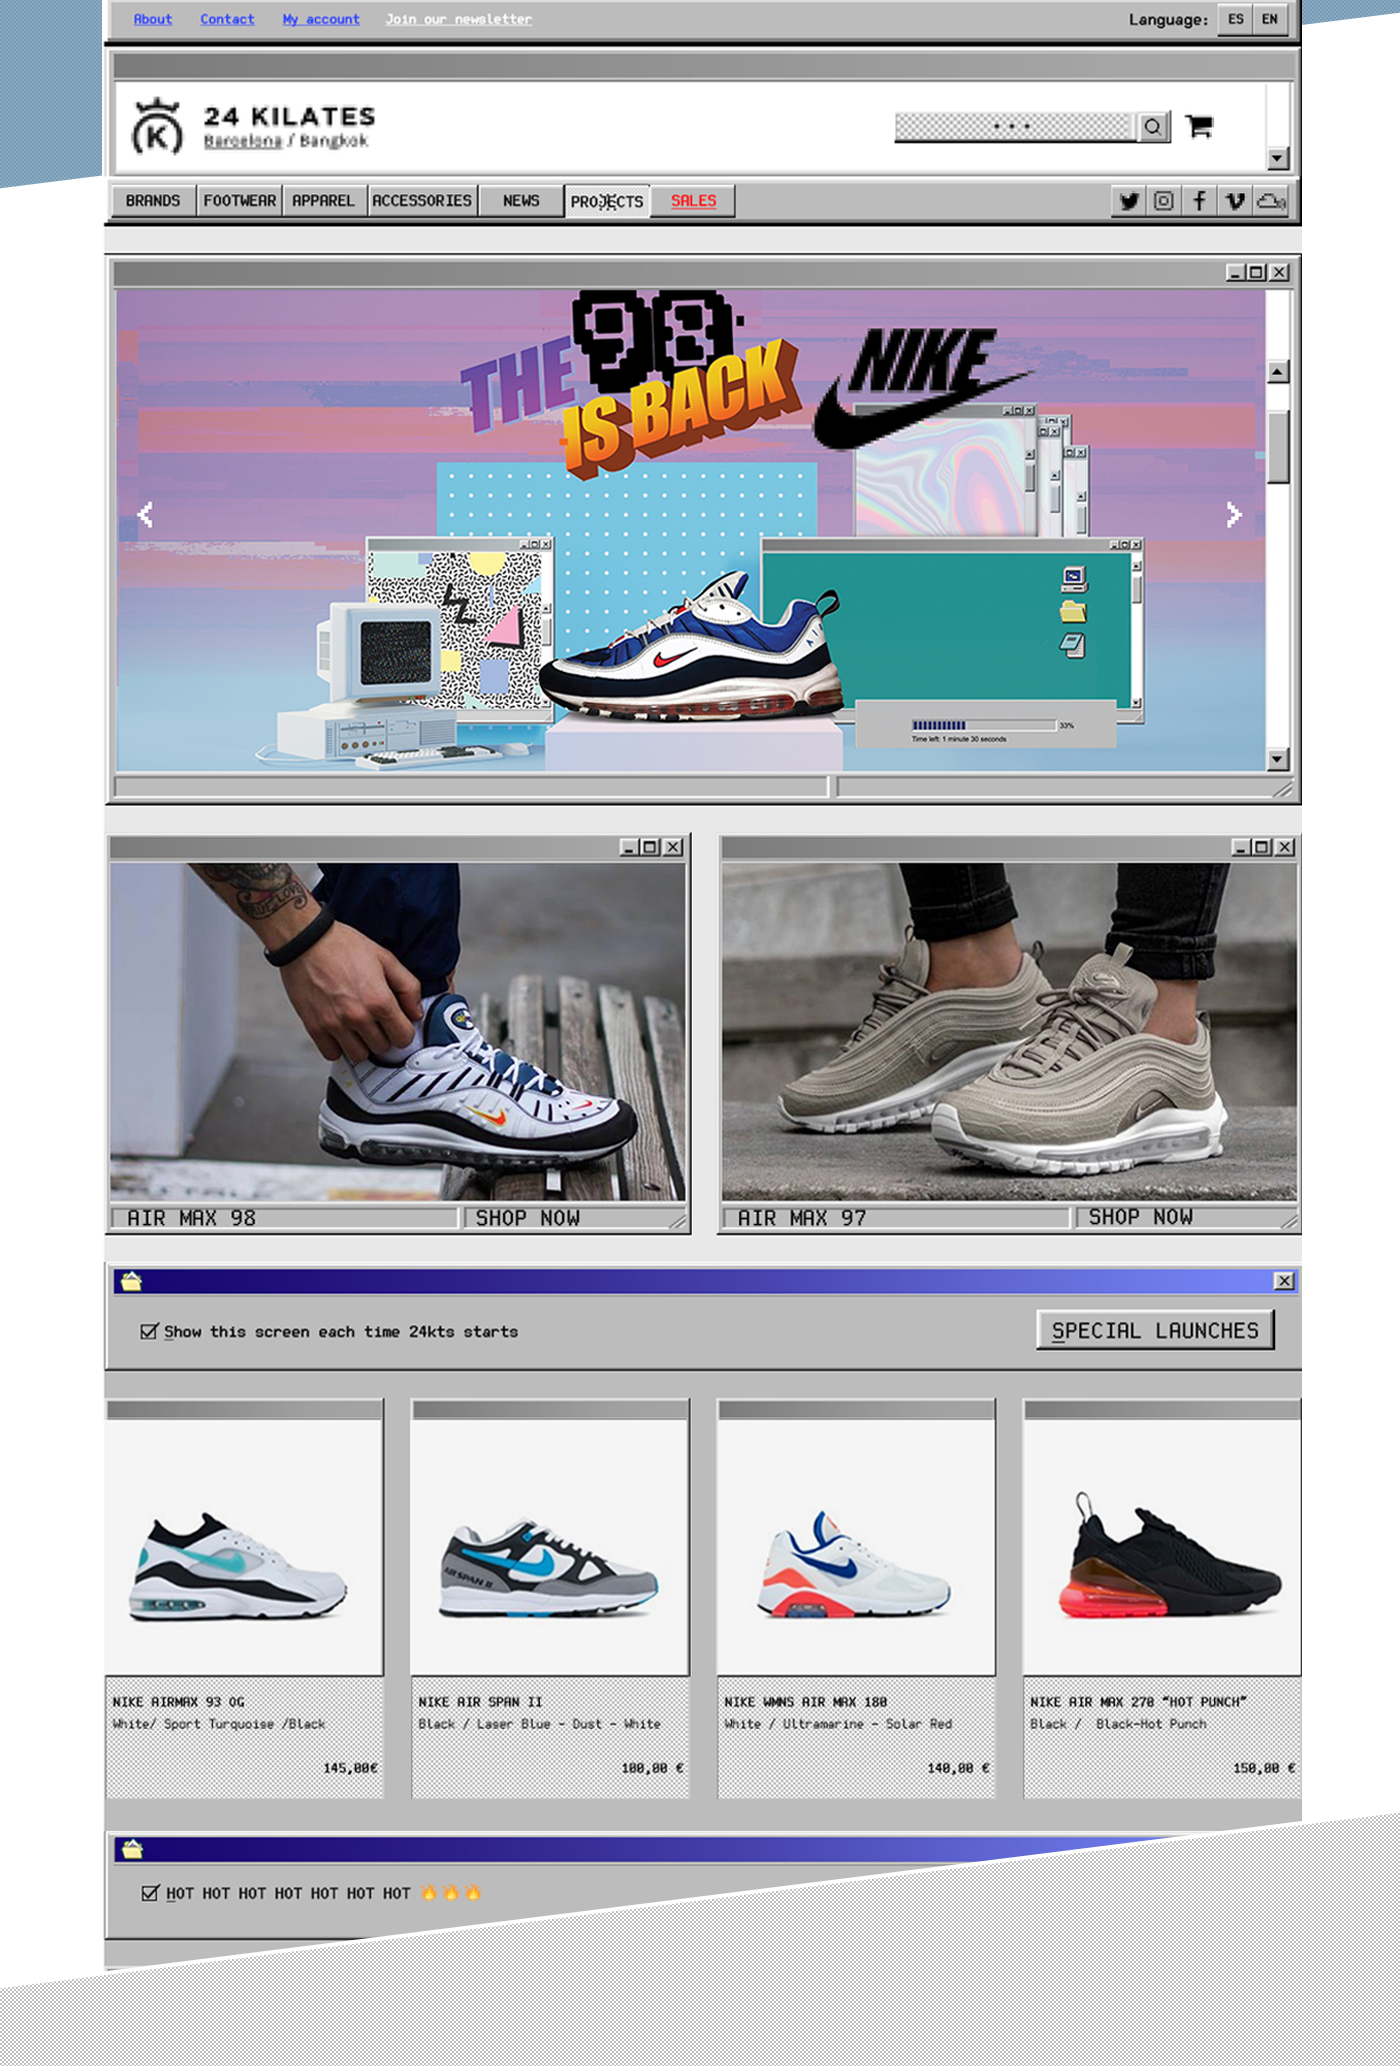 Nike airmax Website Retro Glitch 24kilates 3D still life sneakers